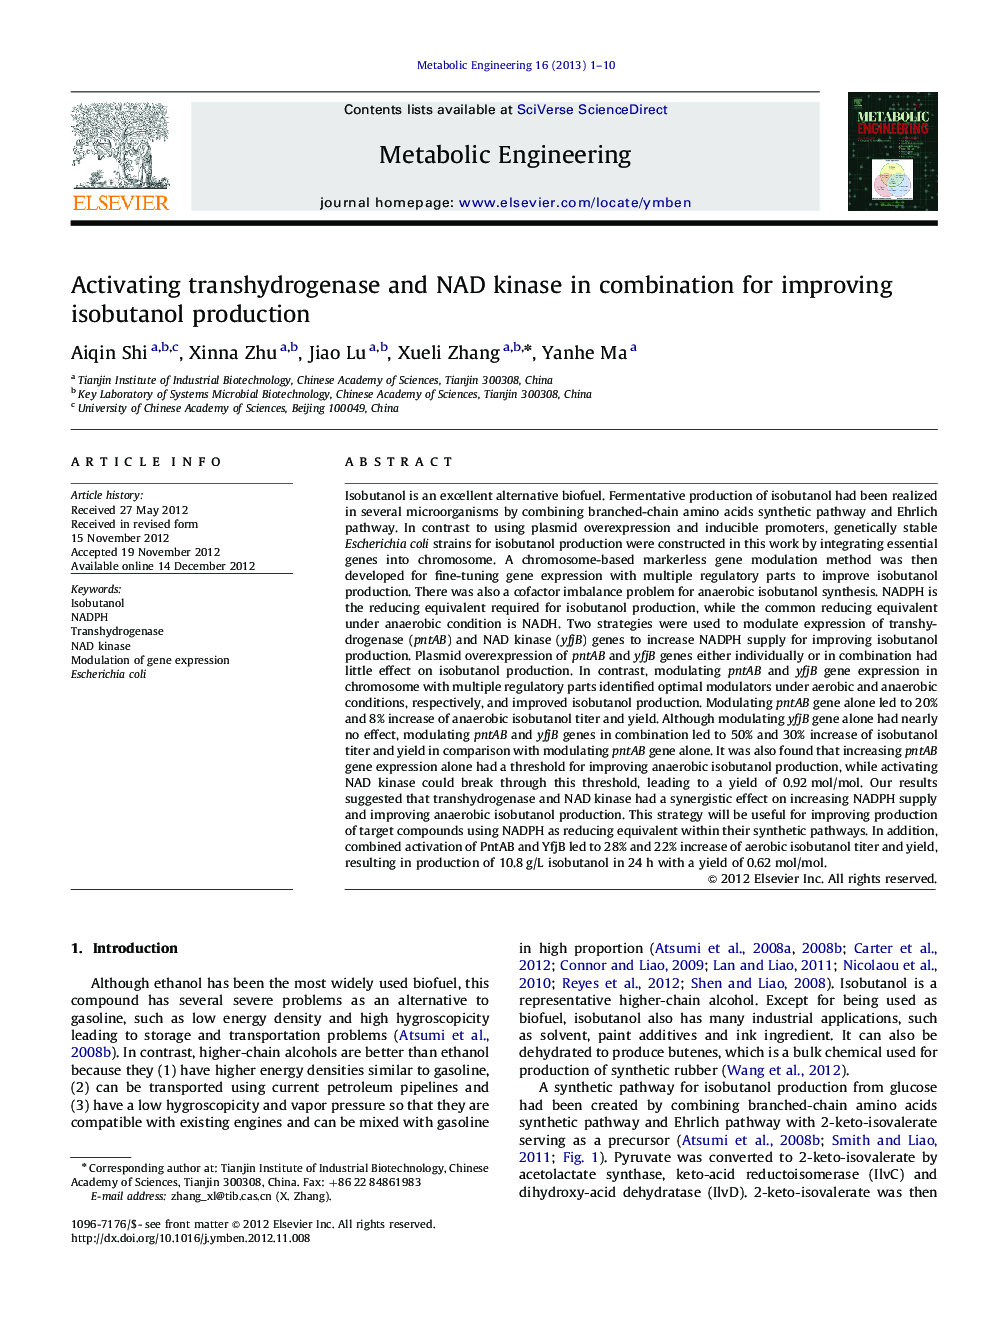 Activating transhydrogenase and NAD kinase in combination for improving isobutanol production